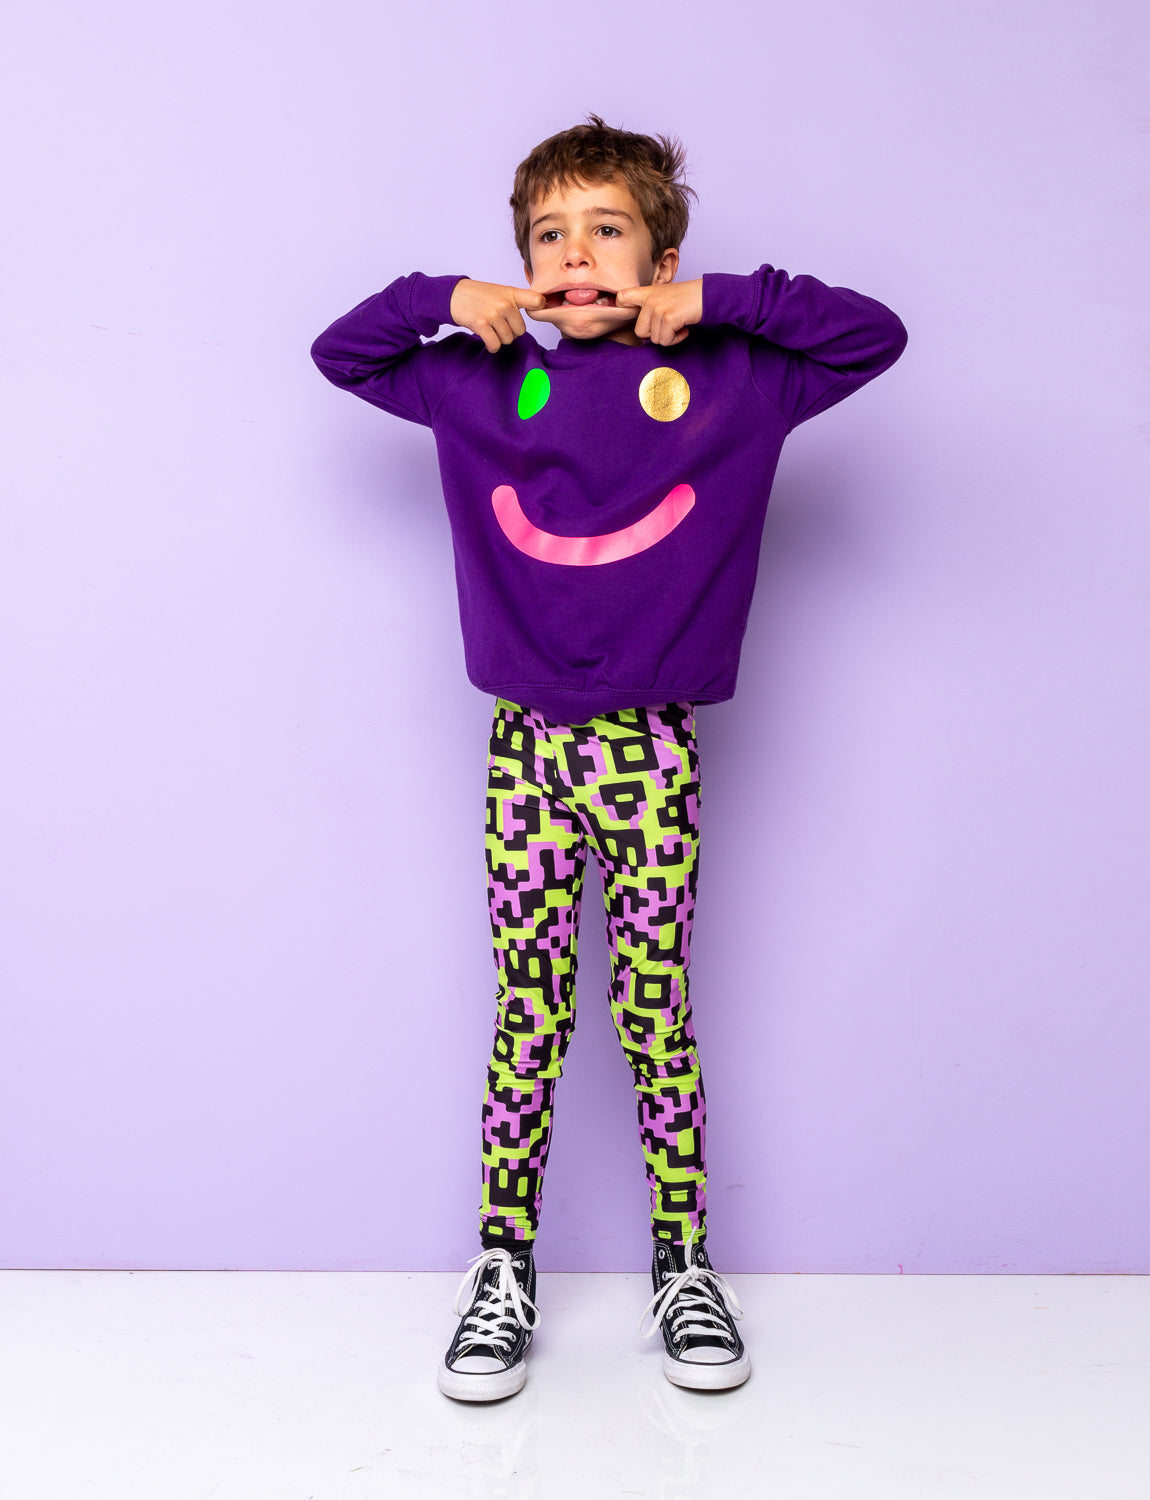 Boy wearing patterned leggings with a purple smily sweatshirt.